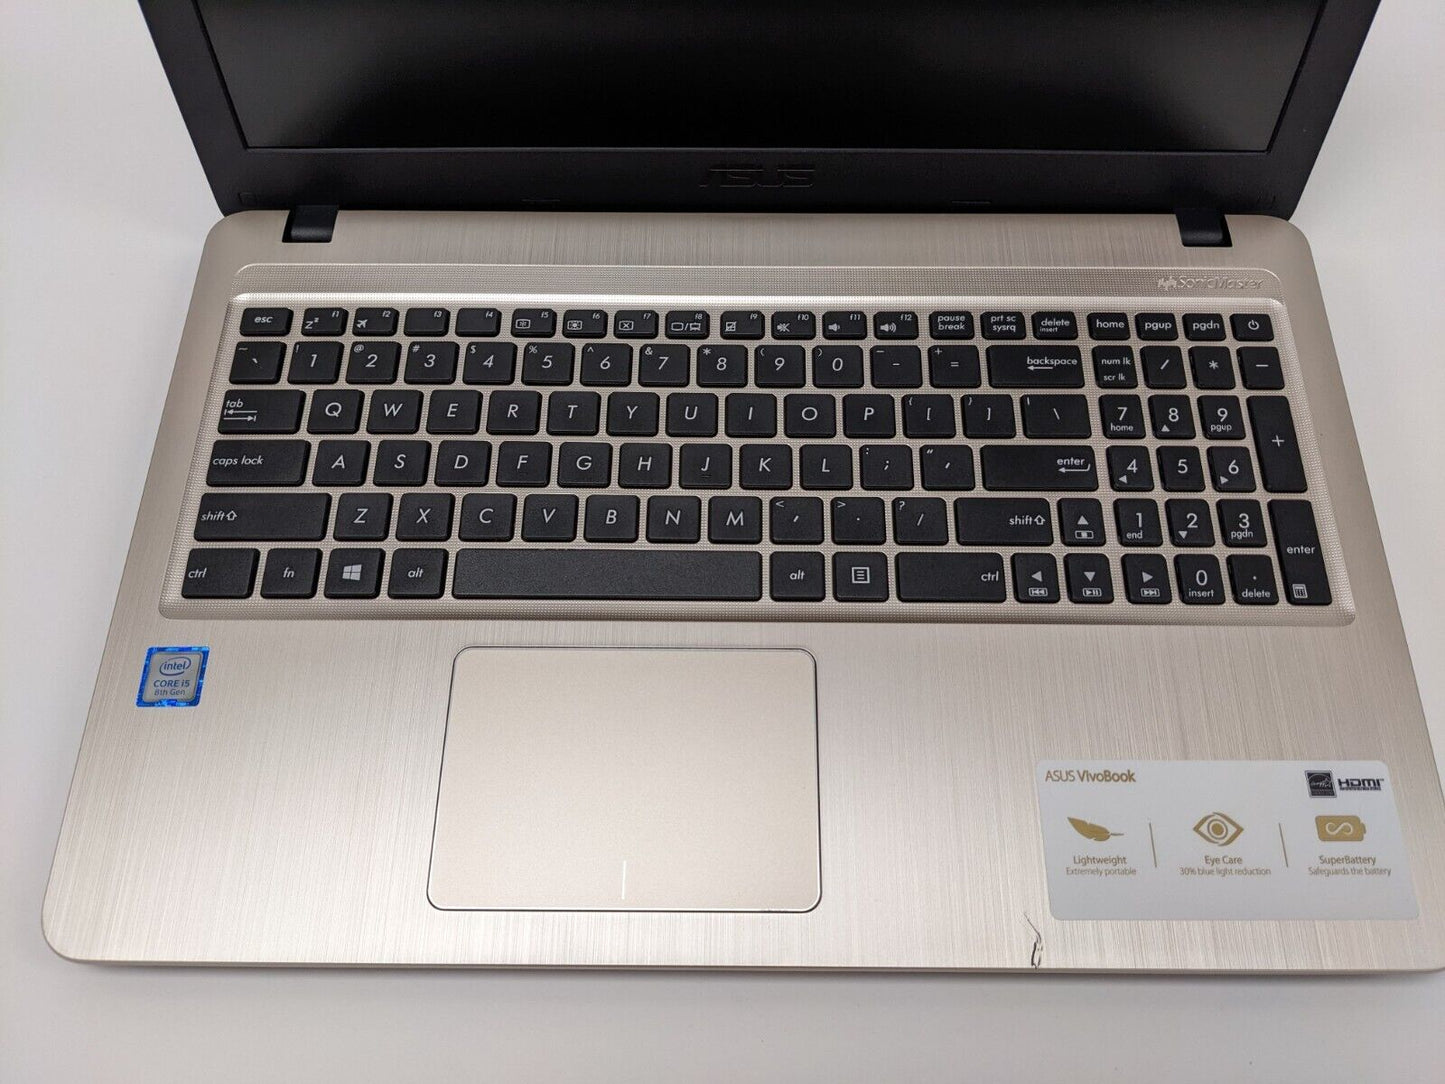 Asus VivoBook 15 15.6" i5 8GB 1TB HDD Laptop - X540UA-DB51 Reconditioned